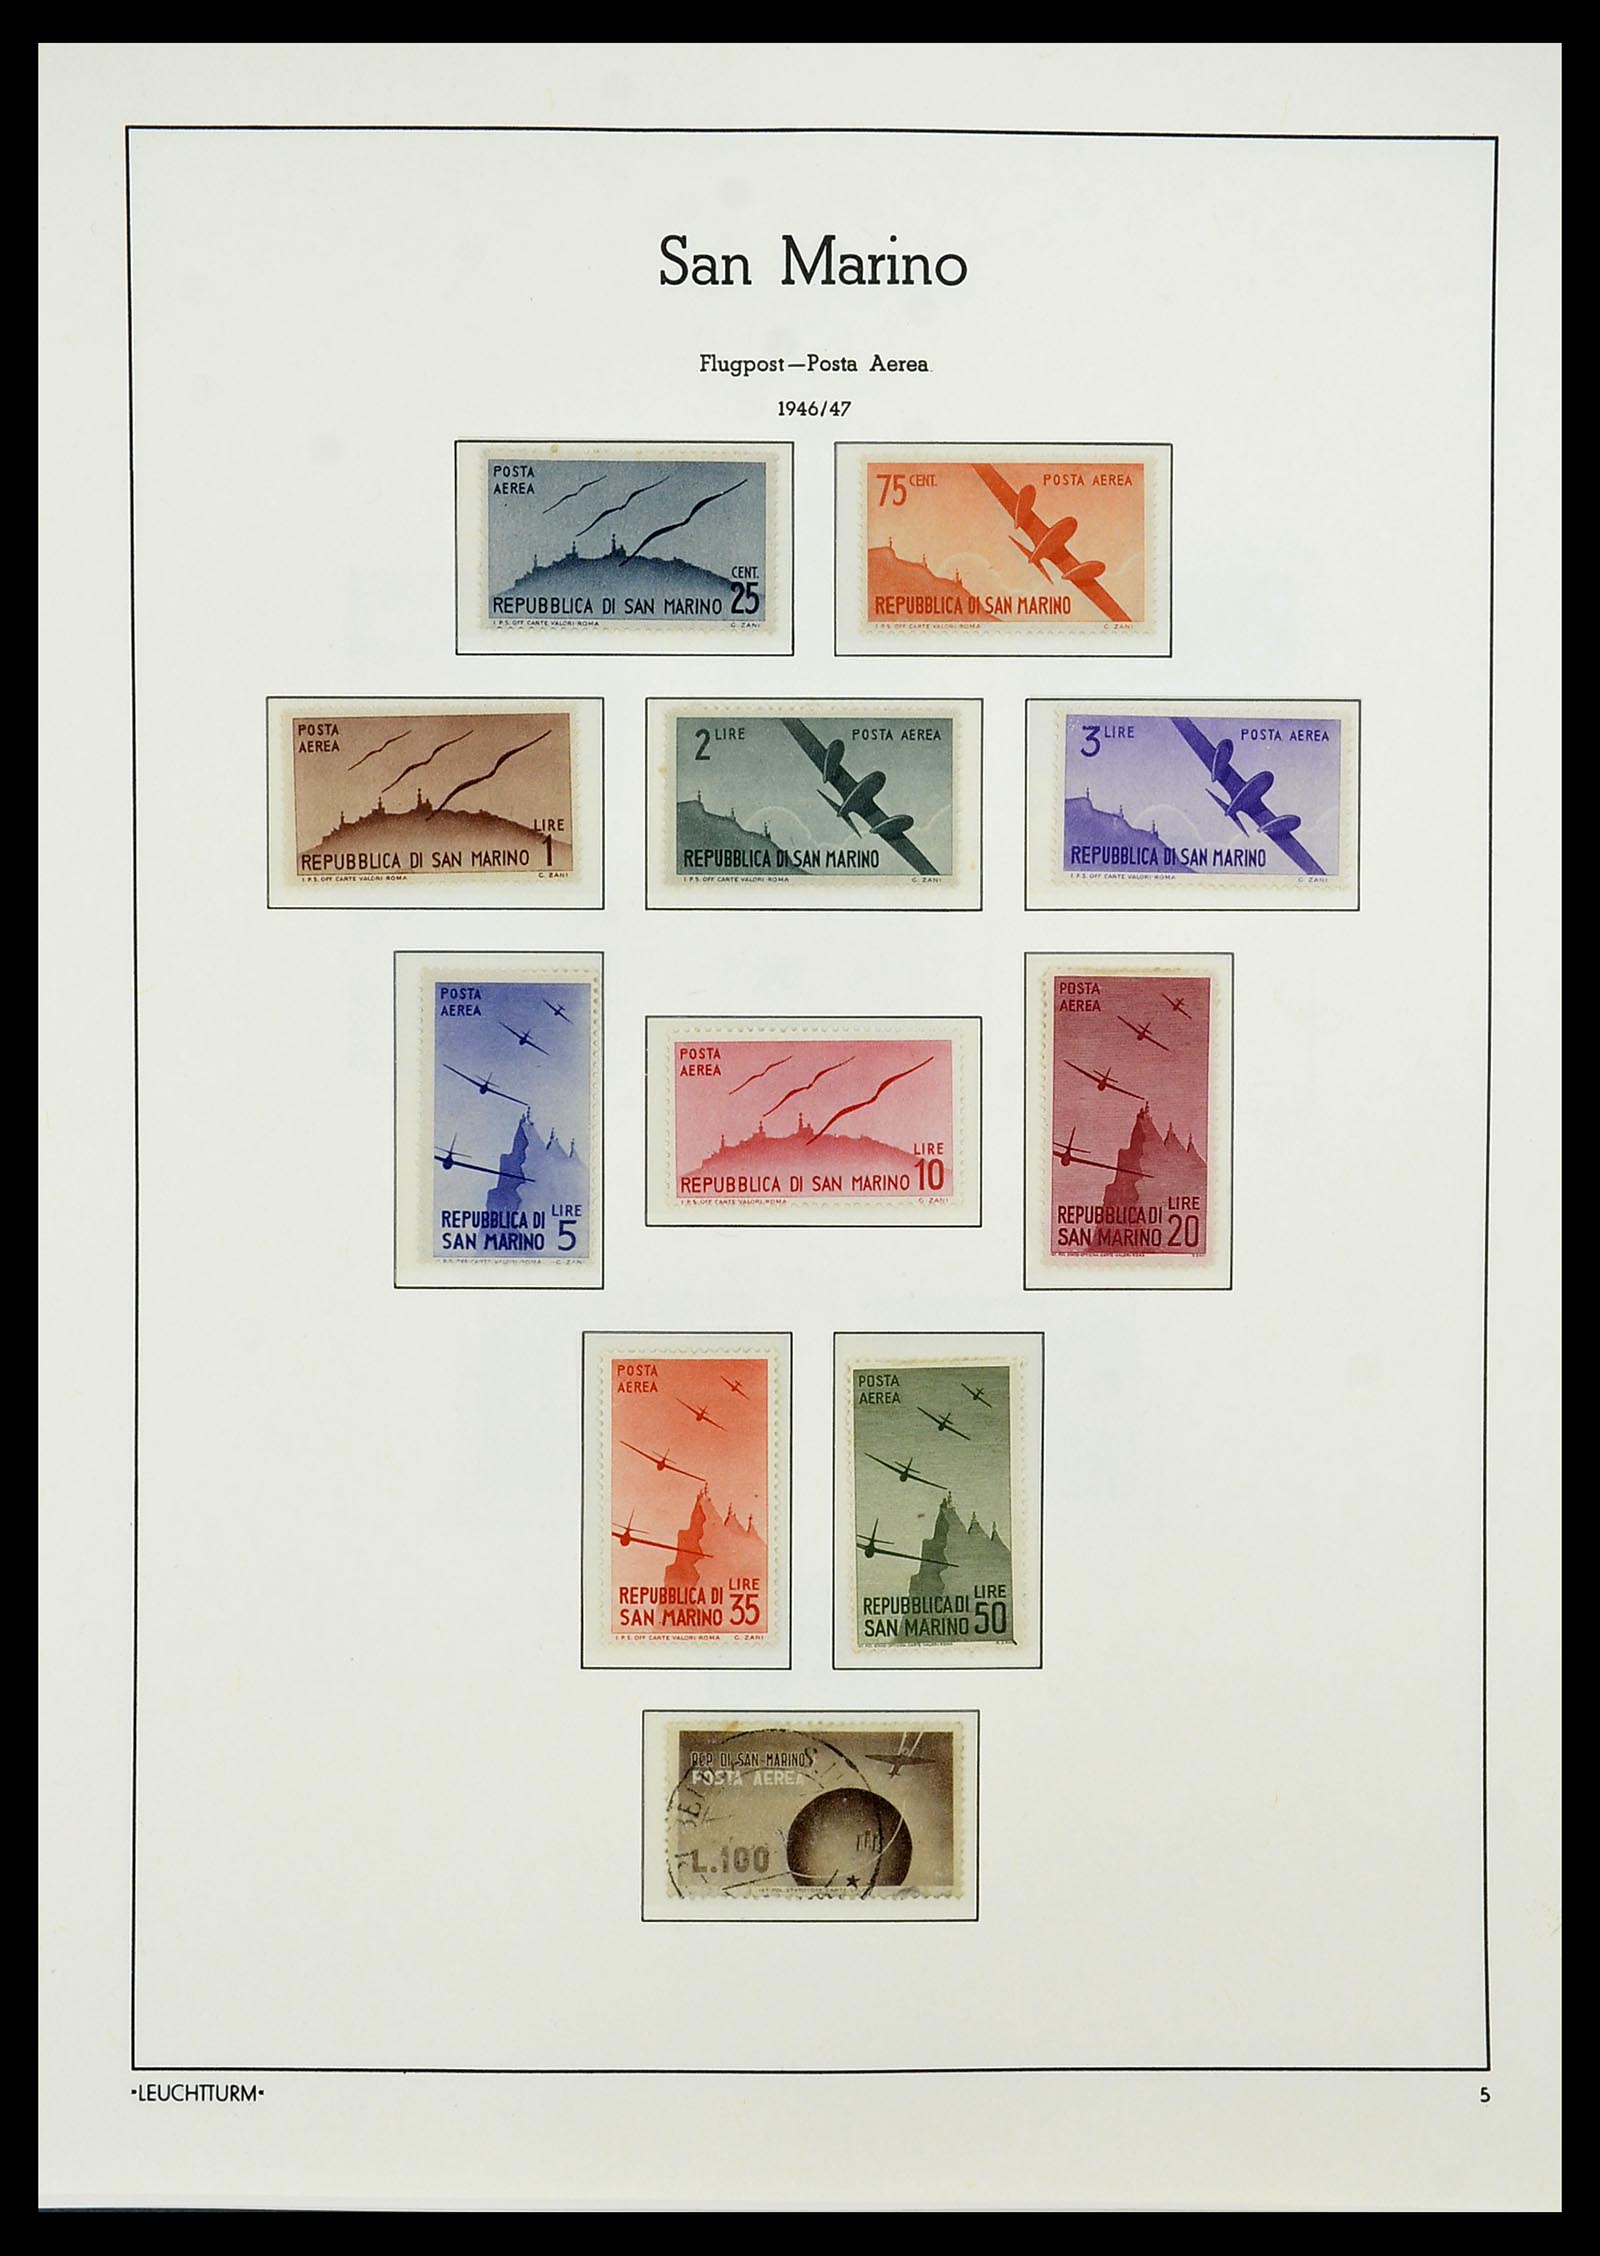 34243 039 - Stamp collection 34243 San Marino 1877-2008.